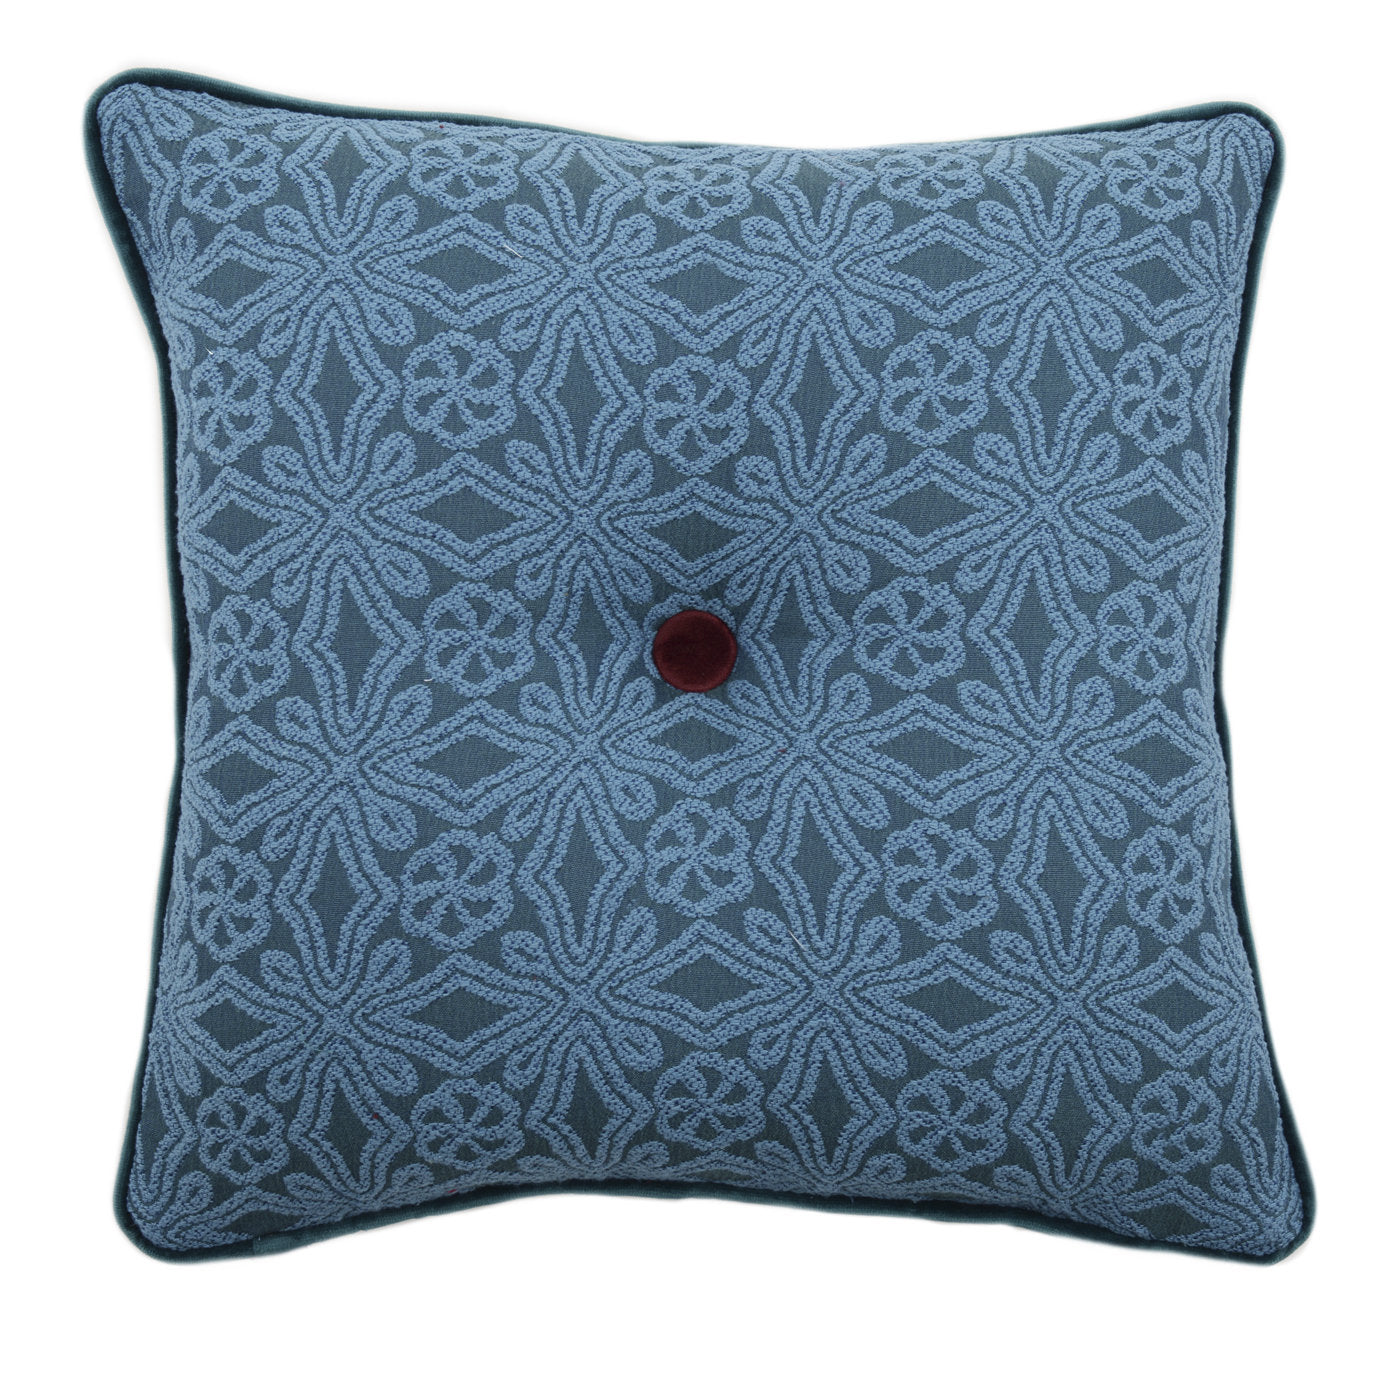 Light Blue Carré Cushion in floreal jacquard fabric - Main view